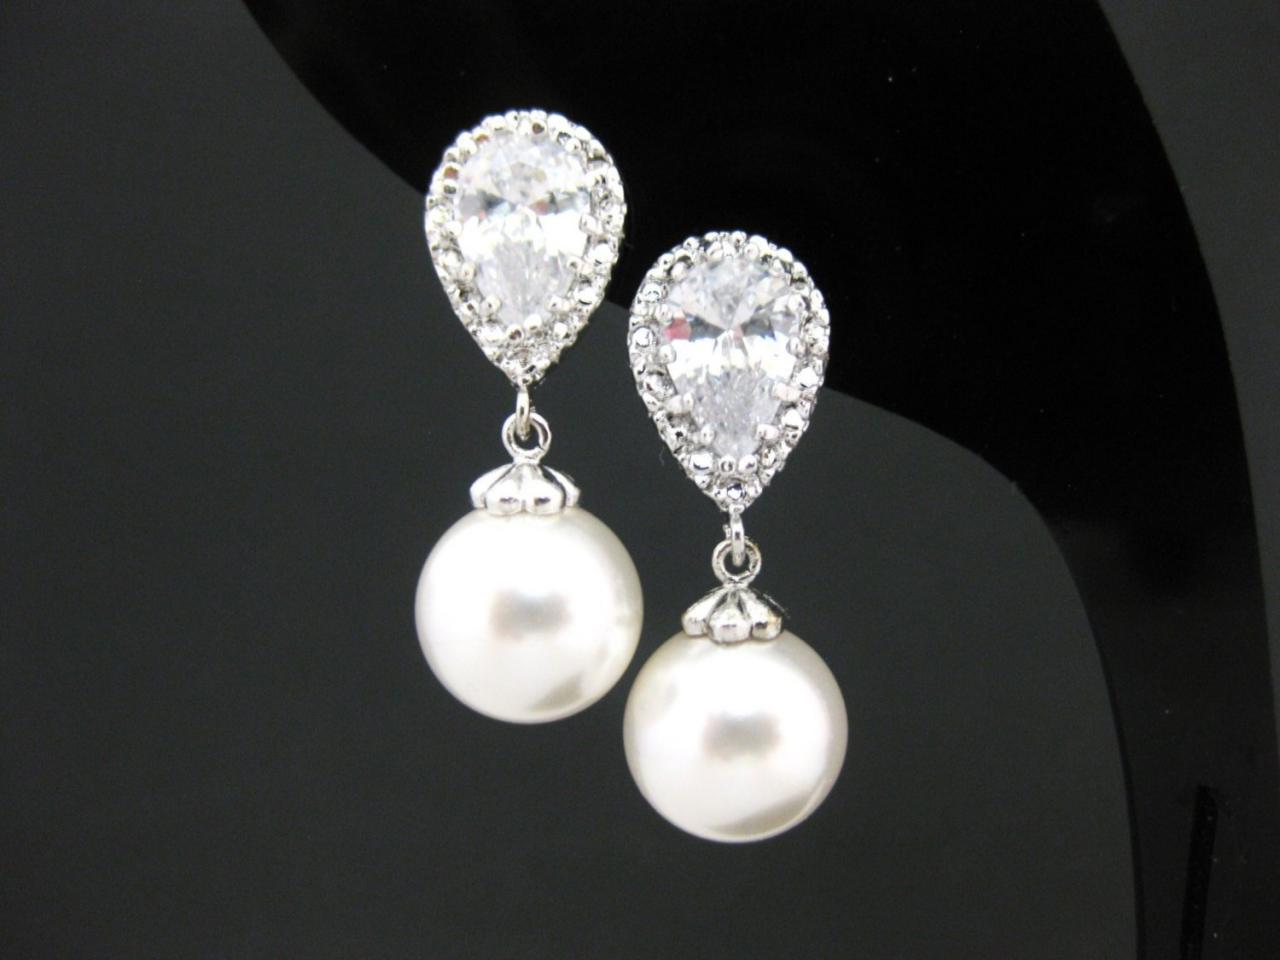 Bridal Pearl Earrings Wedding Jewelry Swarovski 10mm Round Pearl Cubic Zirconia Earrings Bridesmaid Gift Silver Earrings (e176)